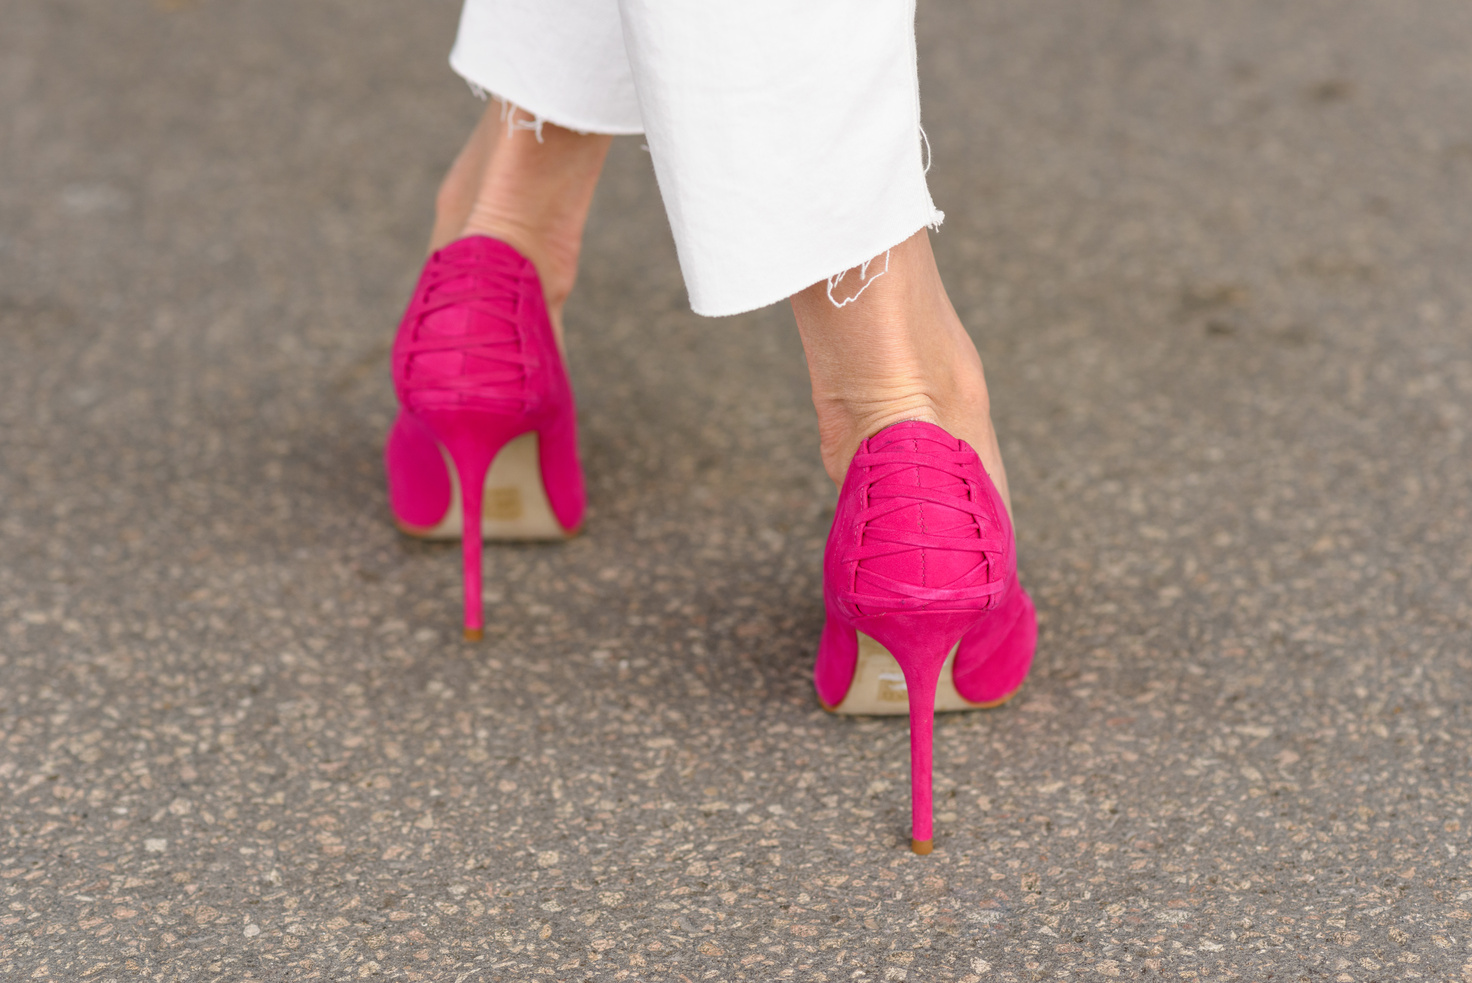 Rear view of a woman wearing pink stilettos